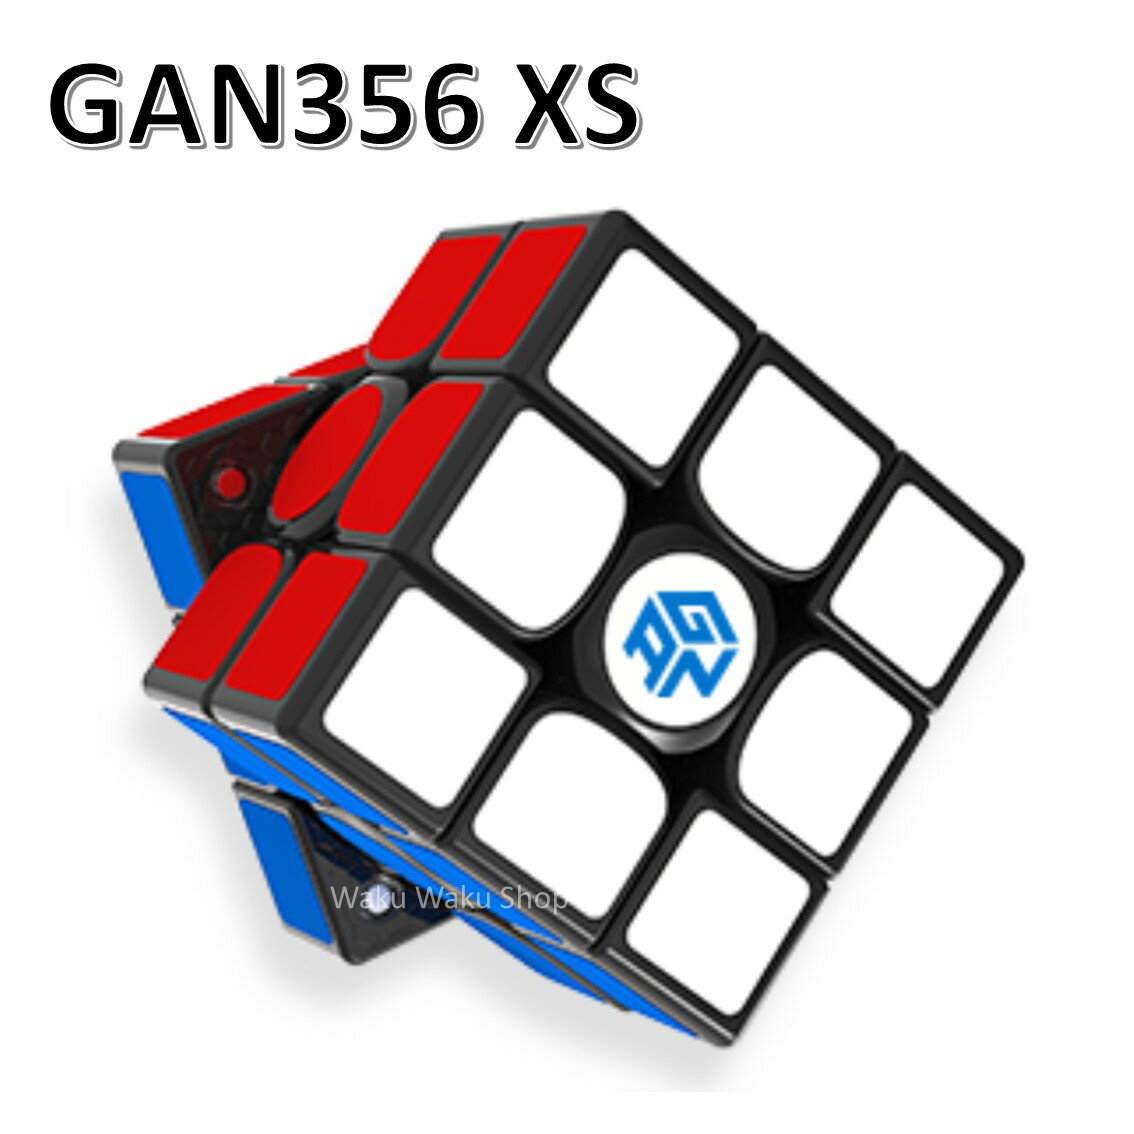   S̕ۏؕt    KAi  Gancube GAN356 XS Z Γ3x3x3L[u (ubN) [rbNL[u  Ȃ߂炩